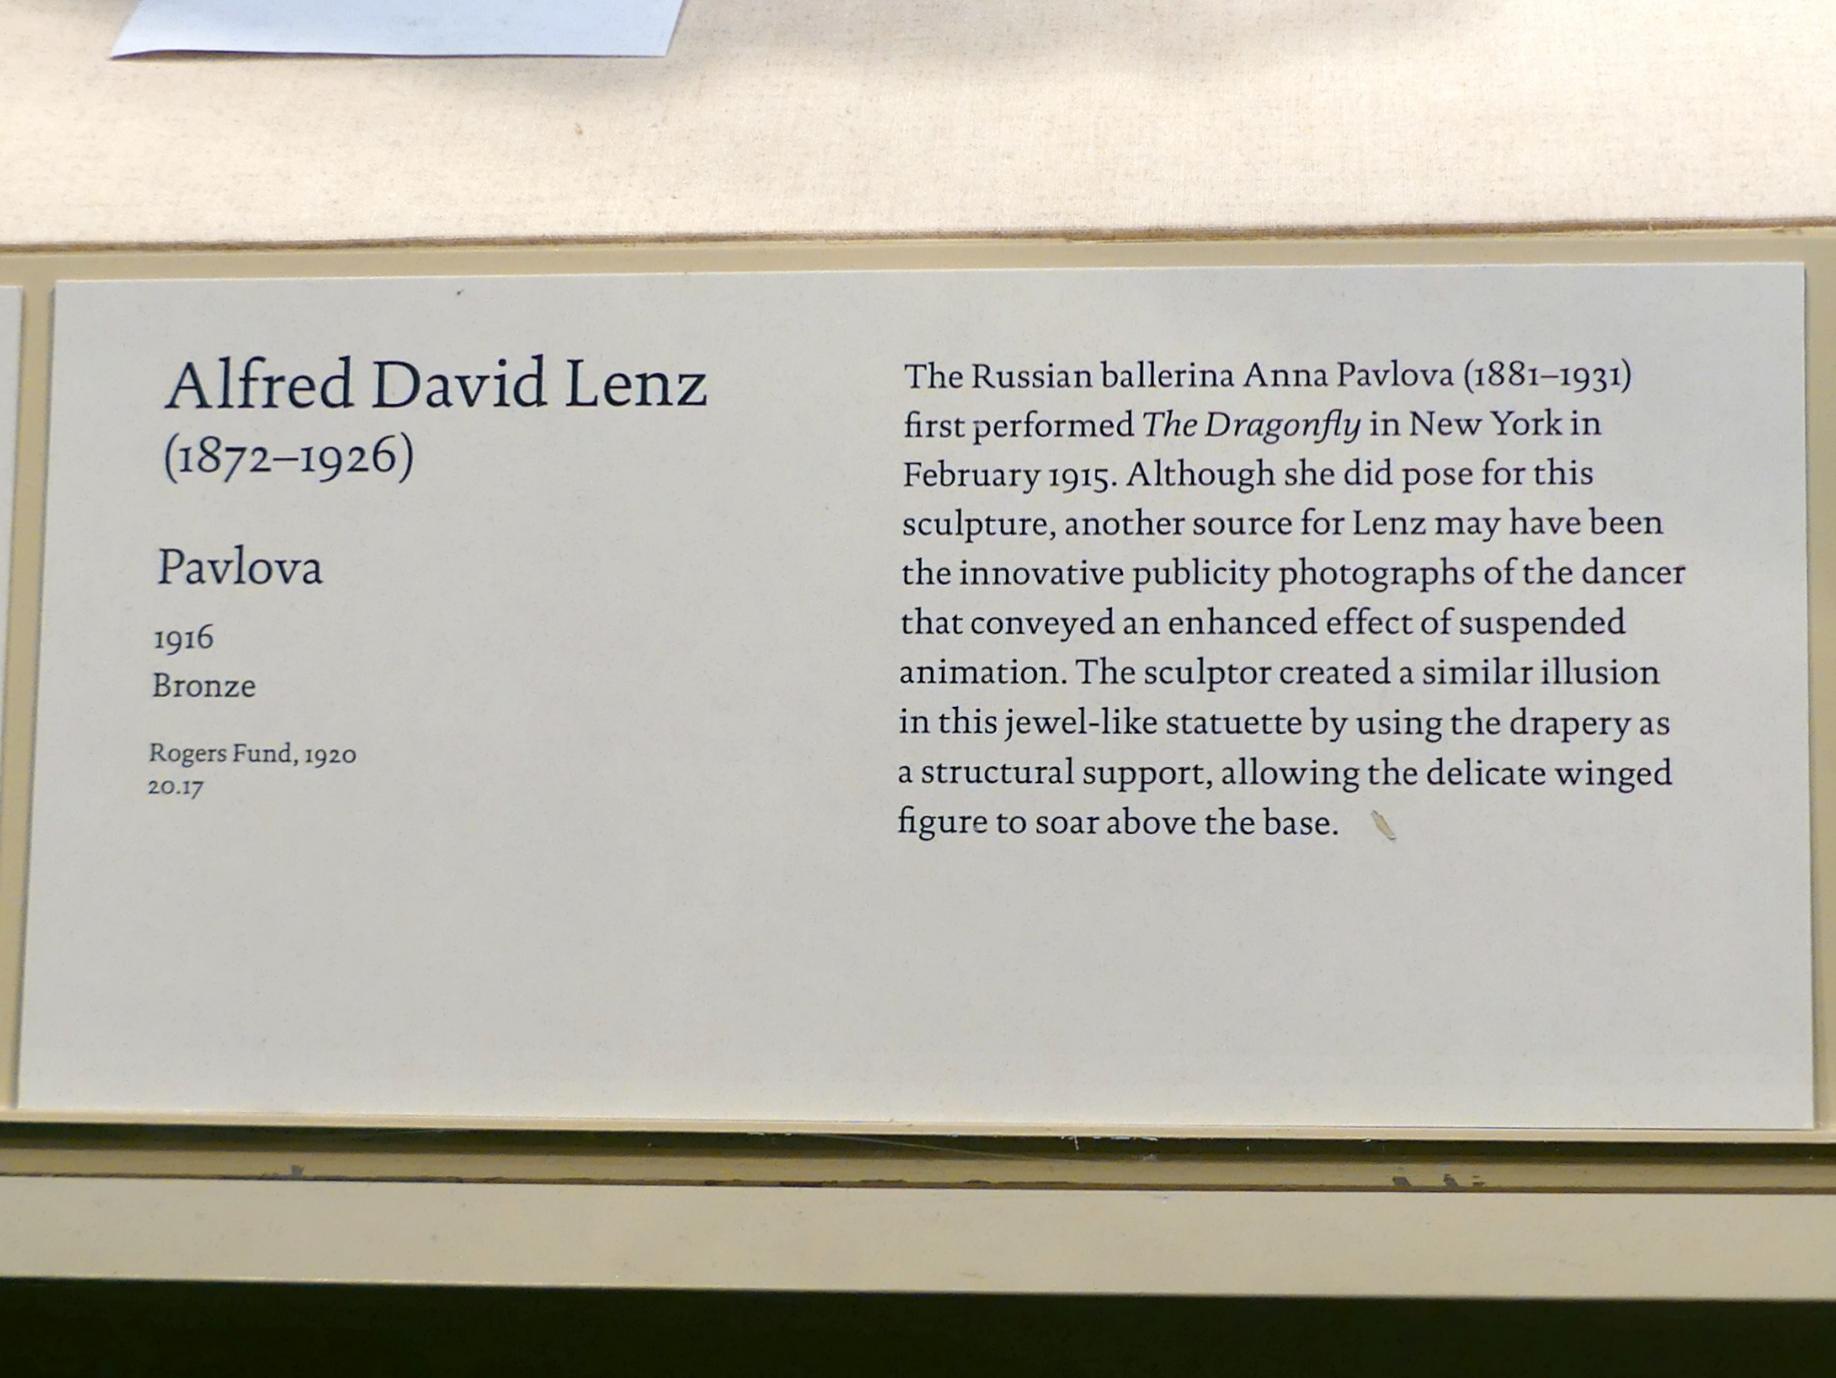 Alfred David Lenz (1916), Pavlova, New York, Metropolitan Museum of Art (Met), Saal 768, 1916